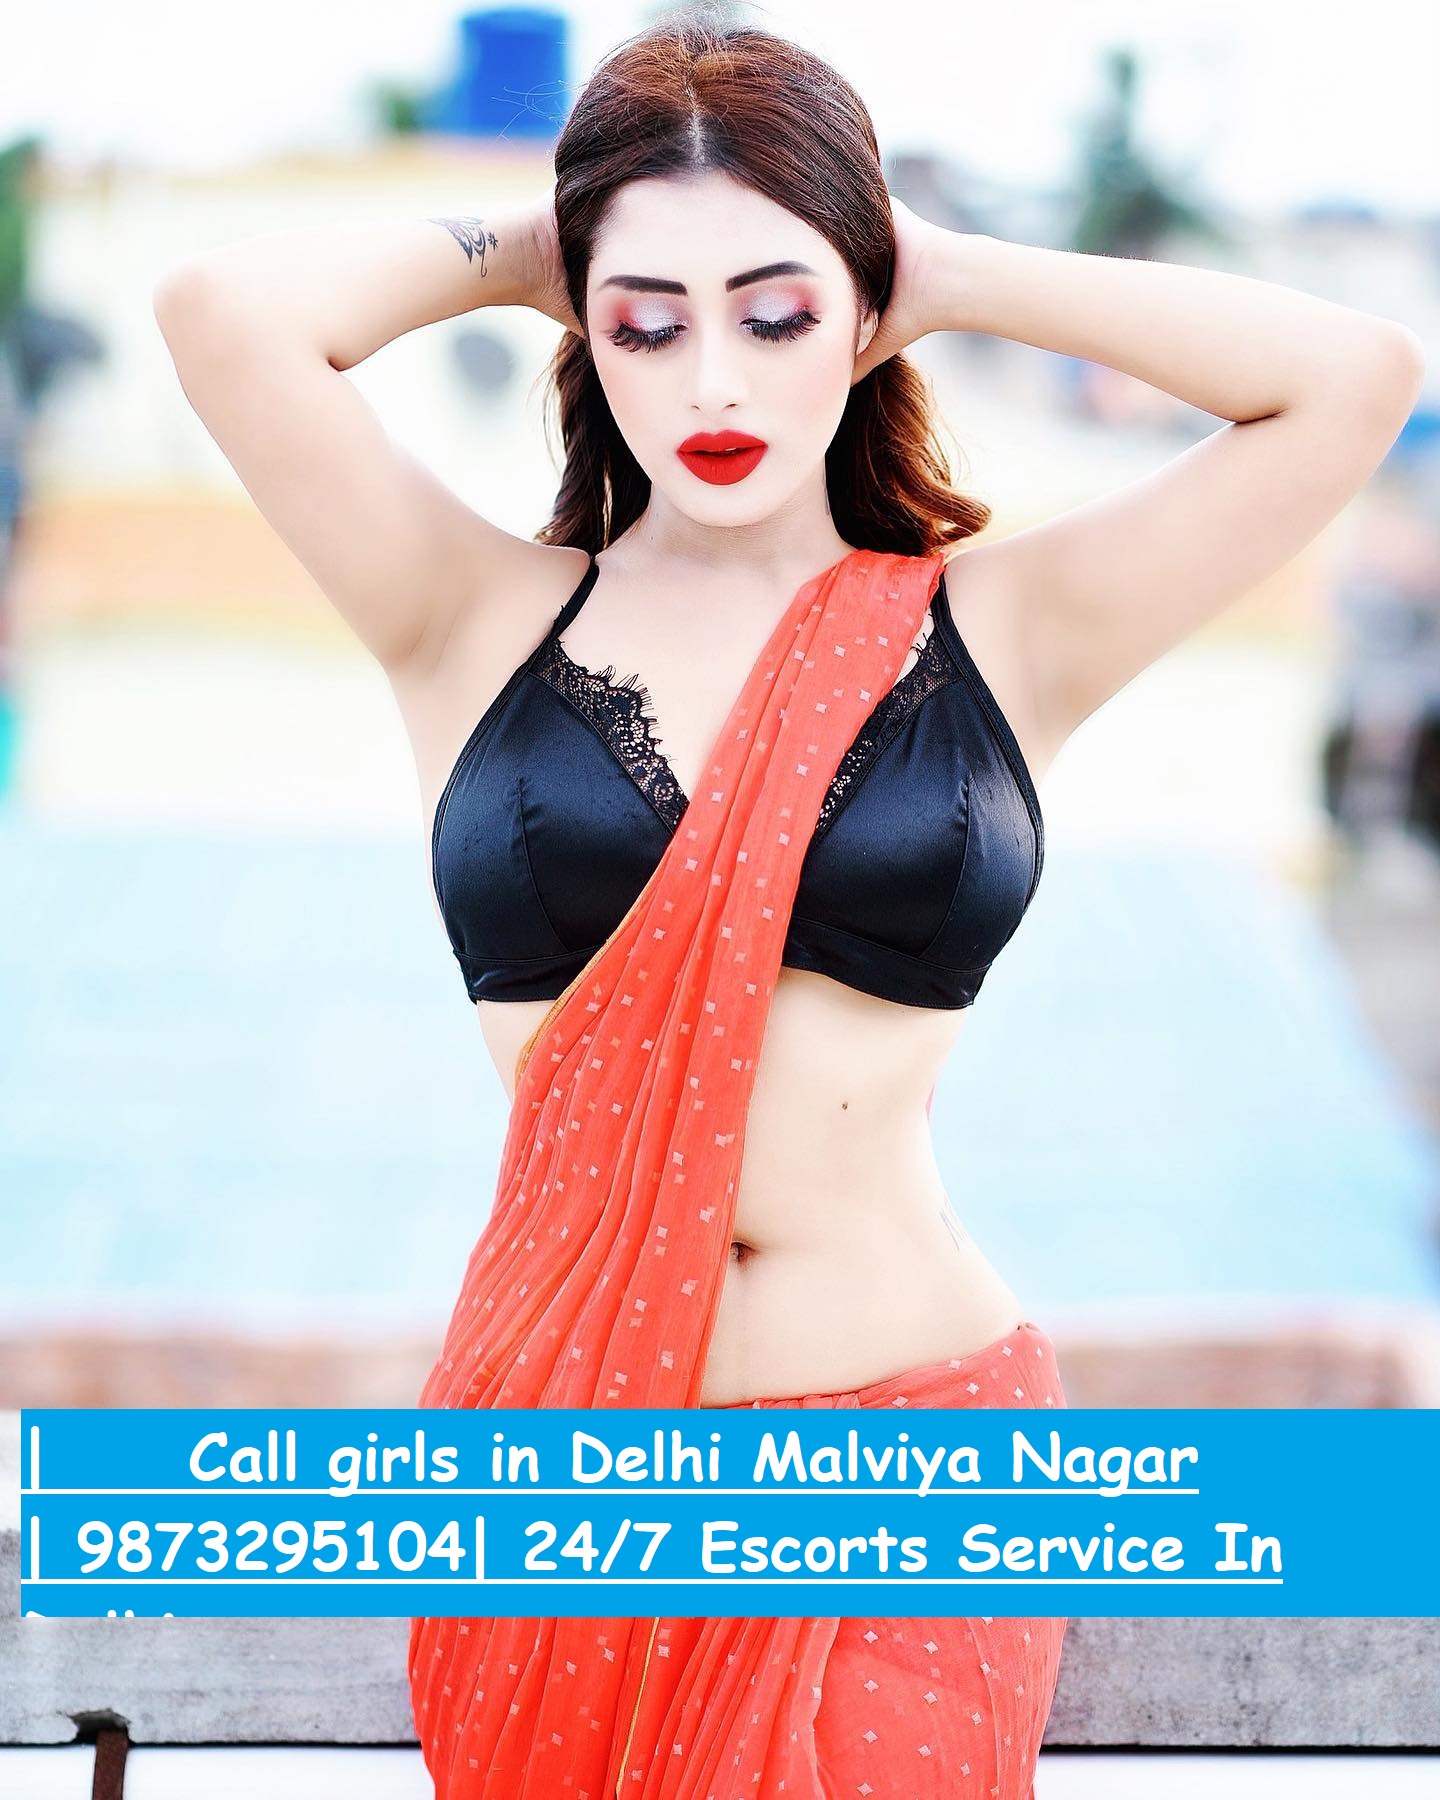 Call girl in Gurgaon - Call Girls in Gurgaon